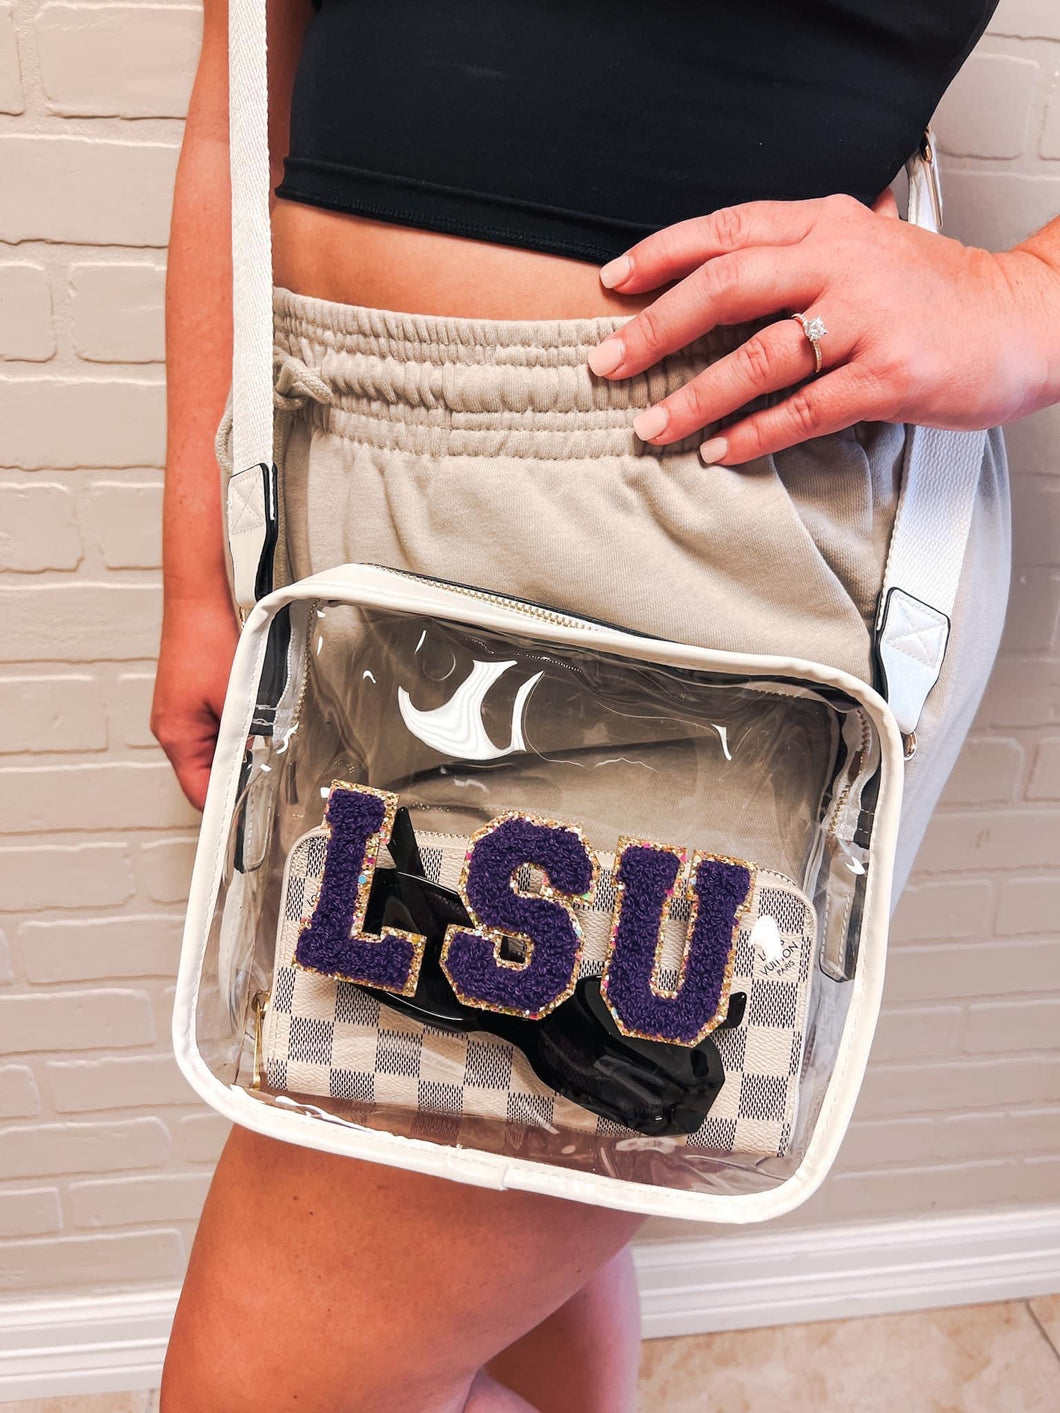 NCAA Louisiana State University Tigers LSU Tote Shoulder Bag Purse Hardboard